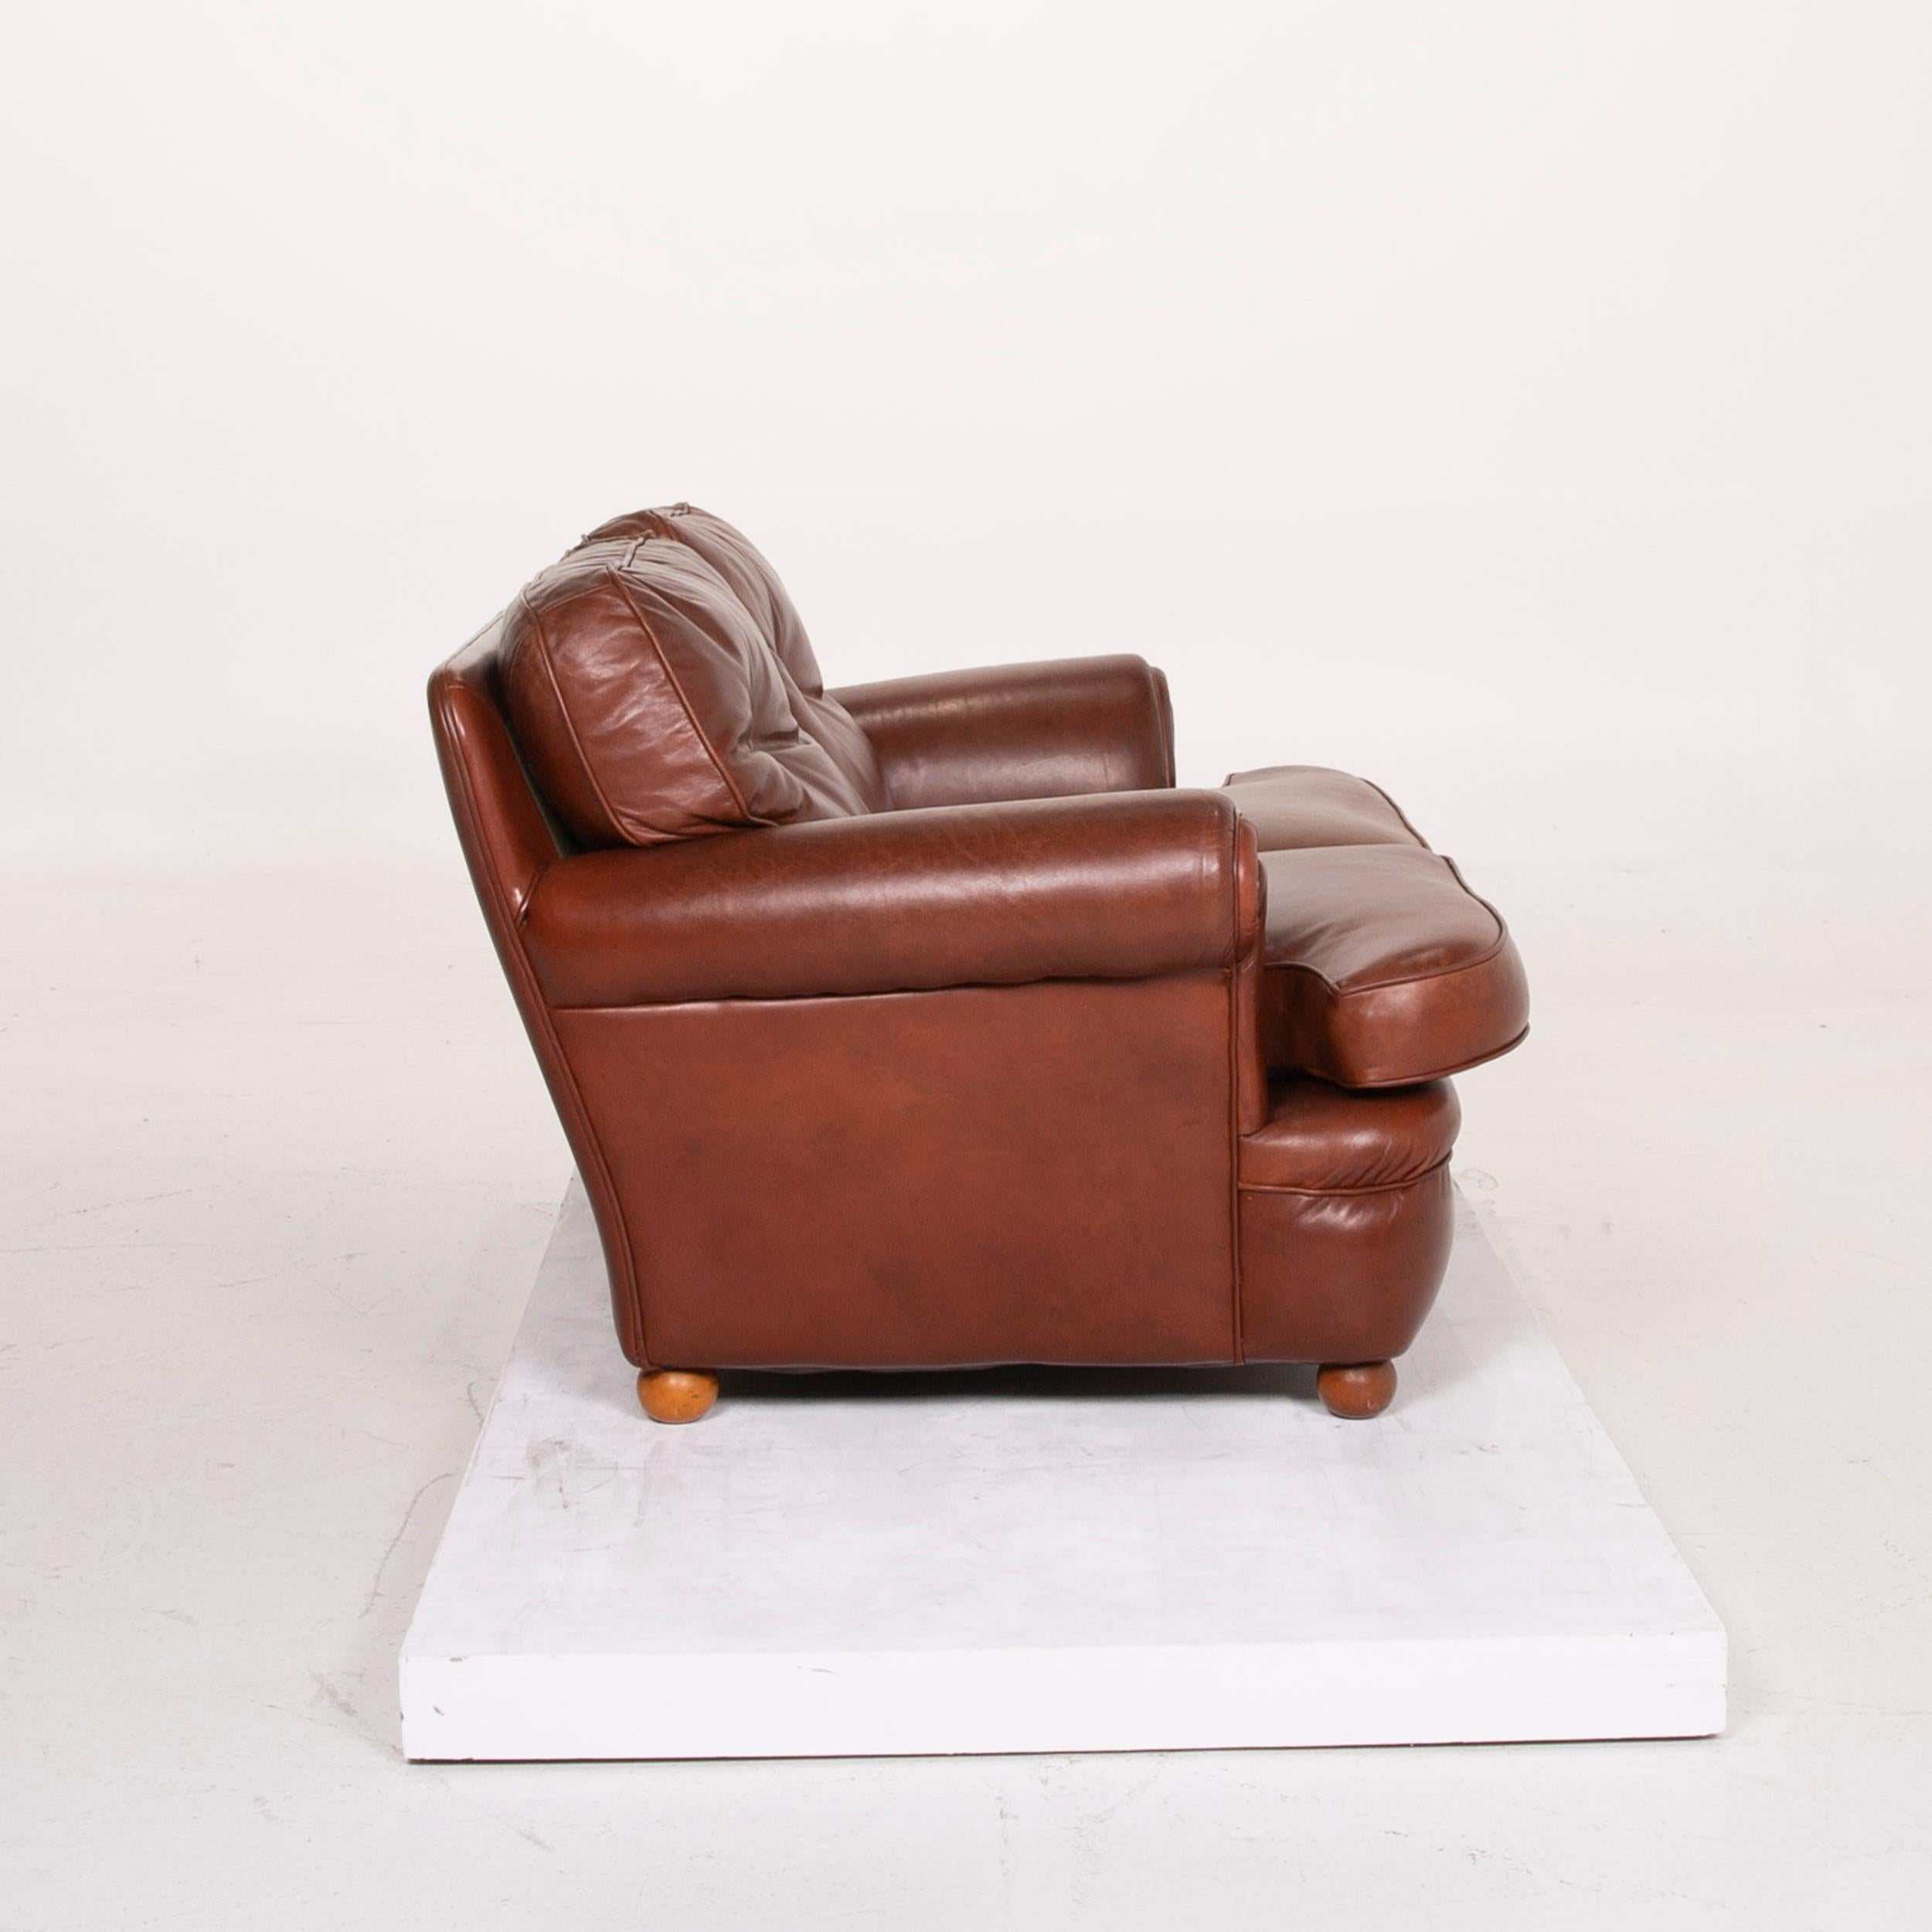 Poltrona Frau Leather Sofa Cognac Two-Seat 2